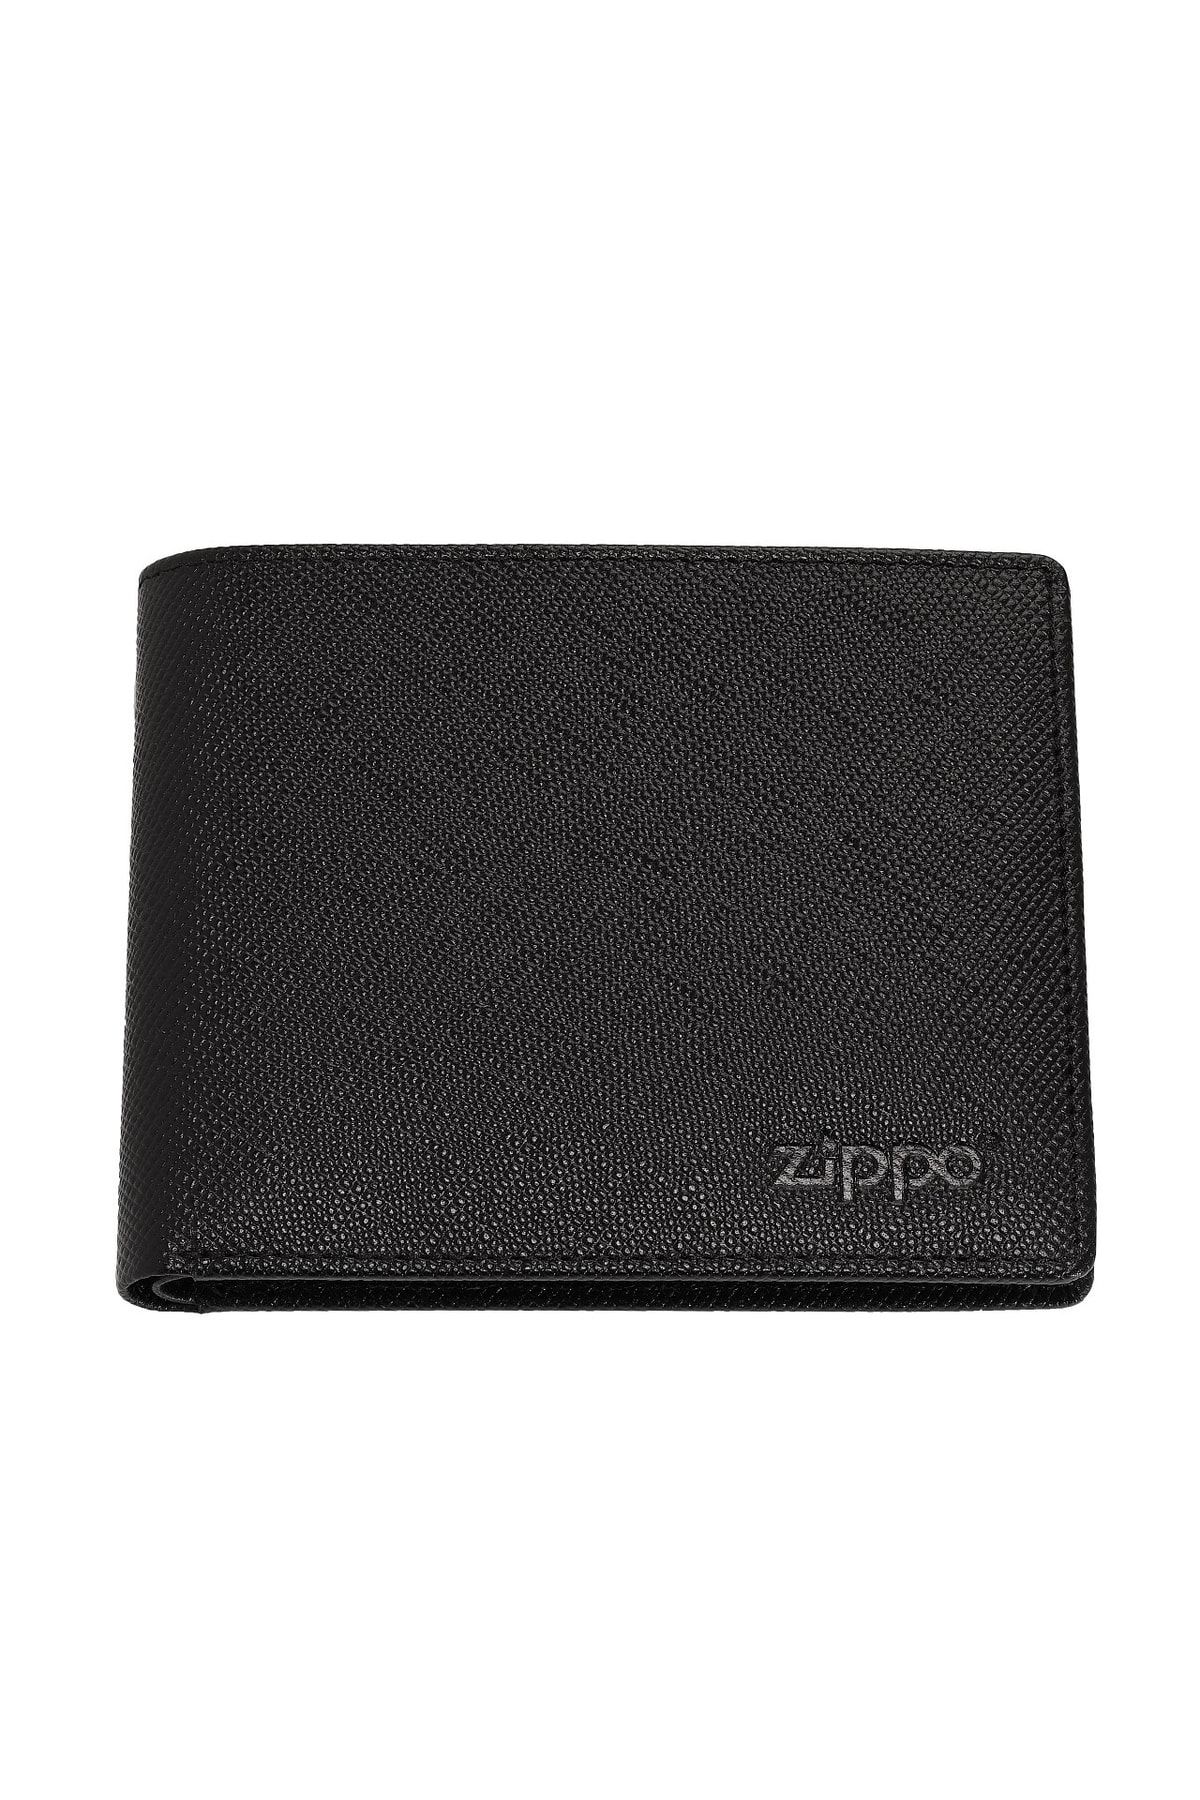 Zippo Cüzdan Saffiano Creditcard Wallet 2007085